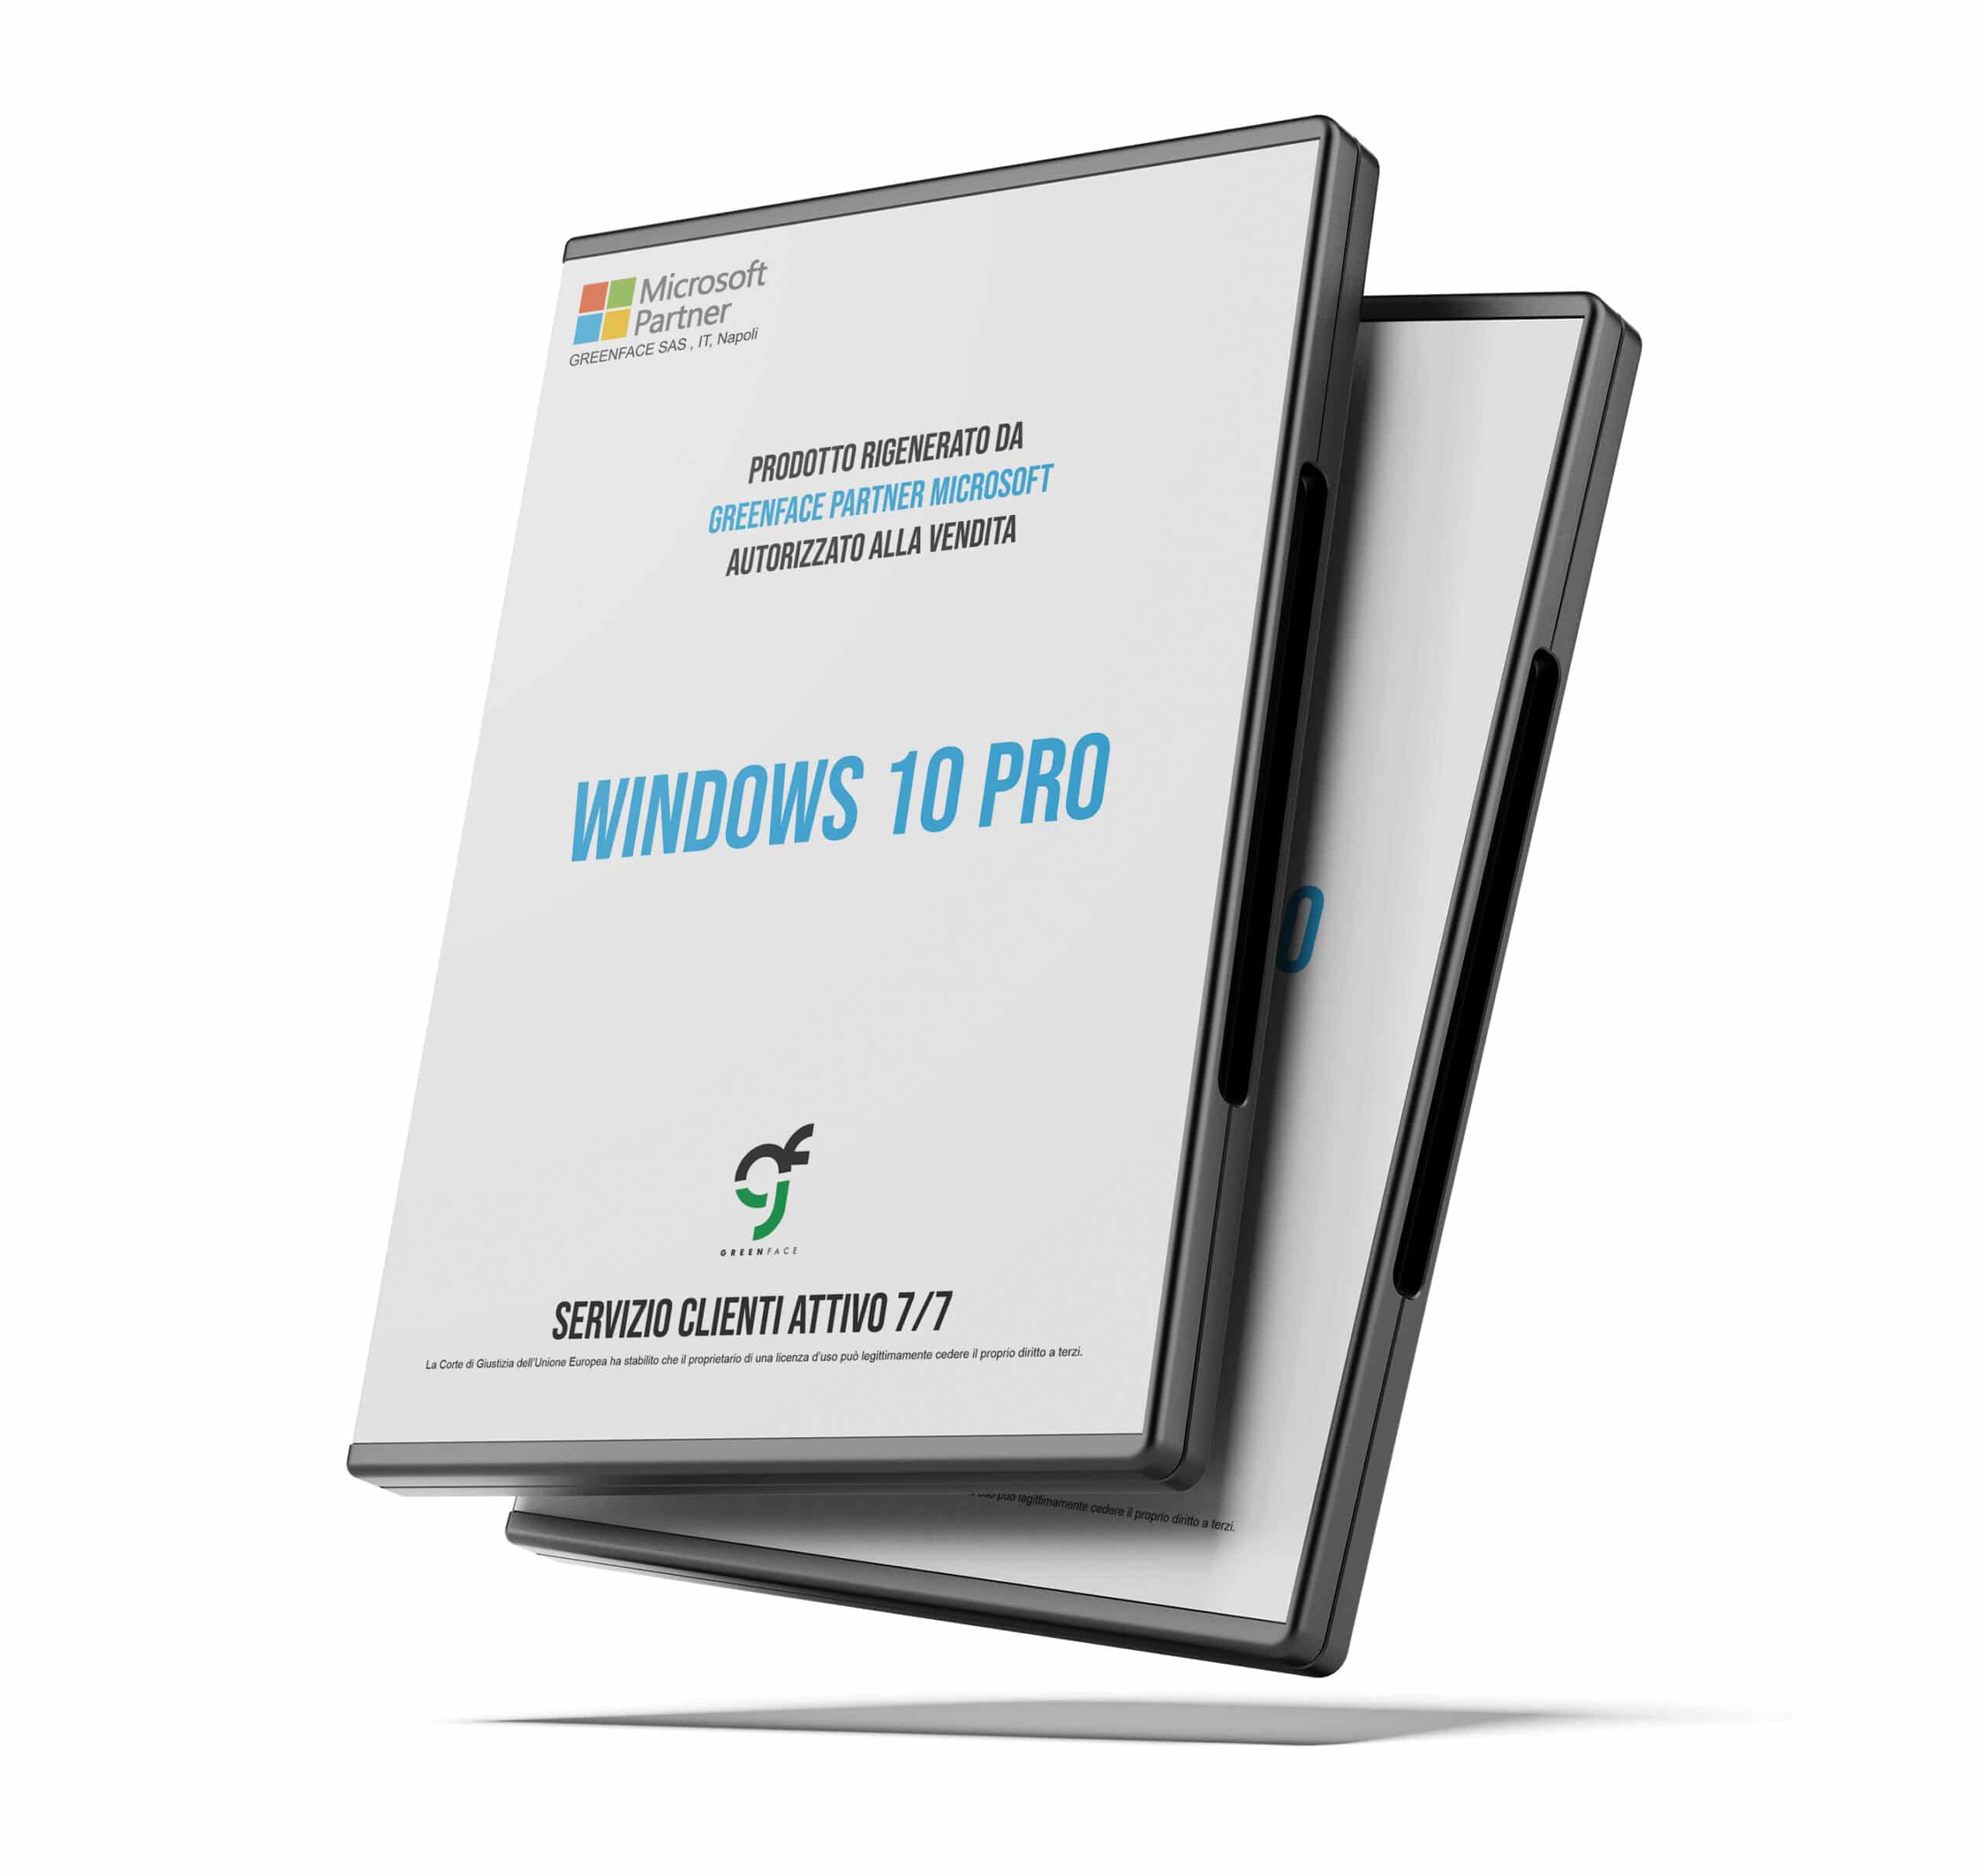 Windows 10 Pro 3264 Bit (VERSIONE UPGRADE) – GreenFace